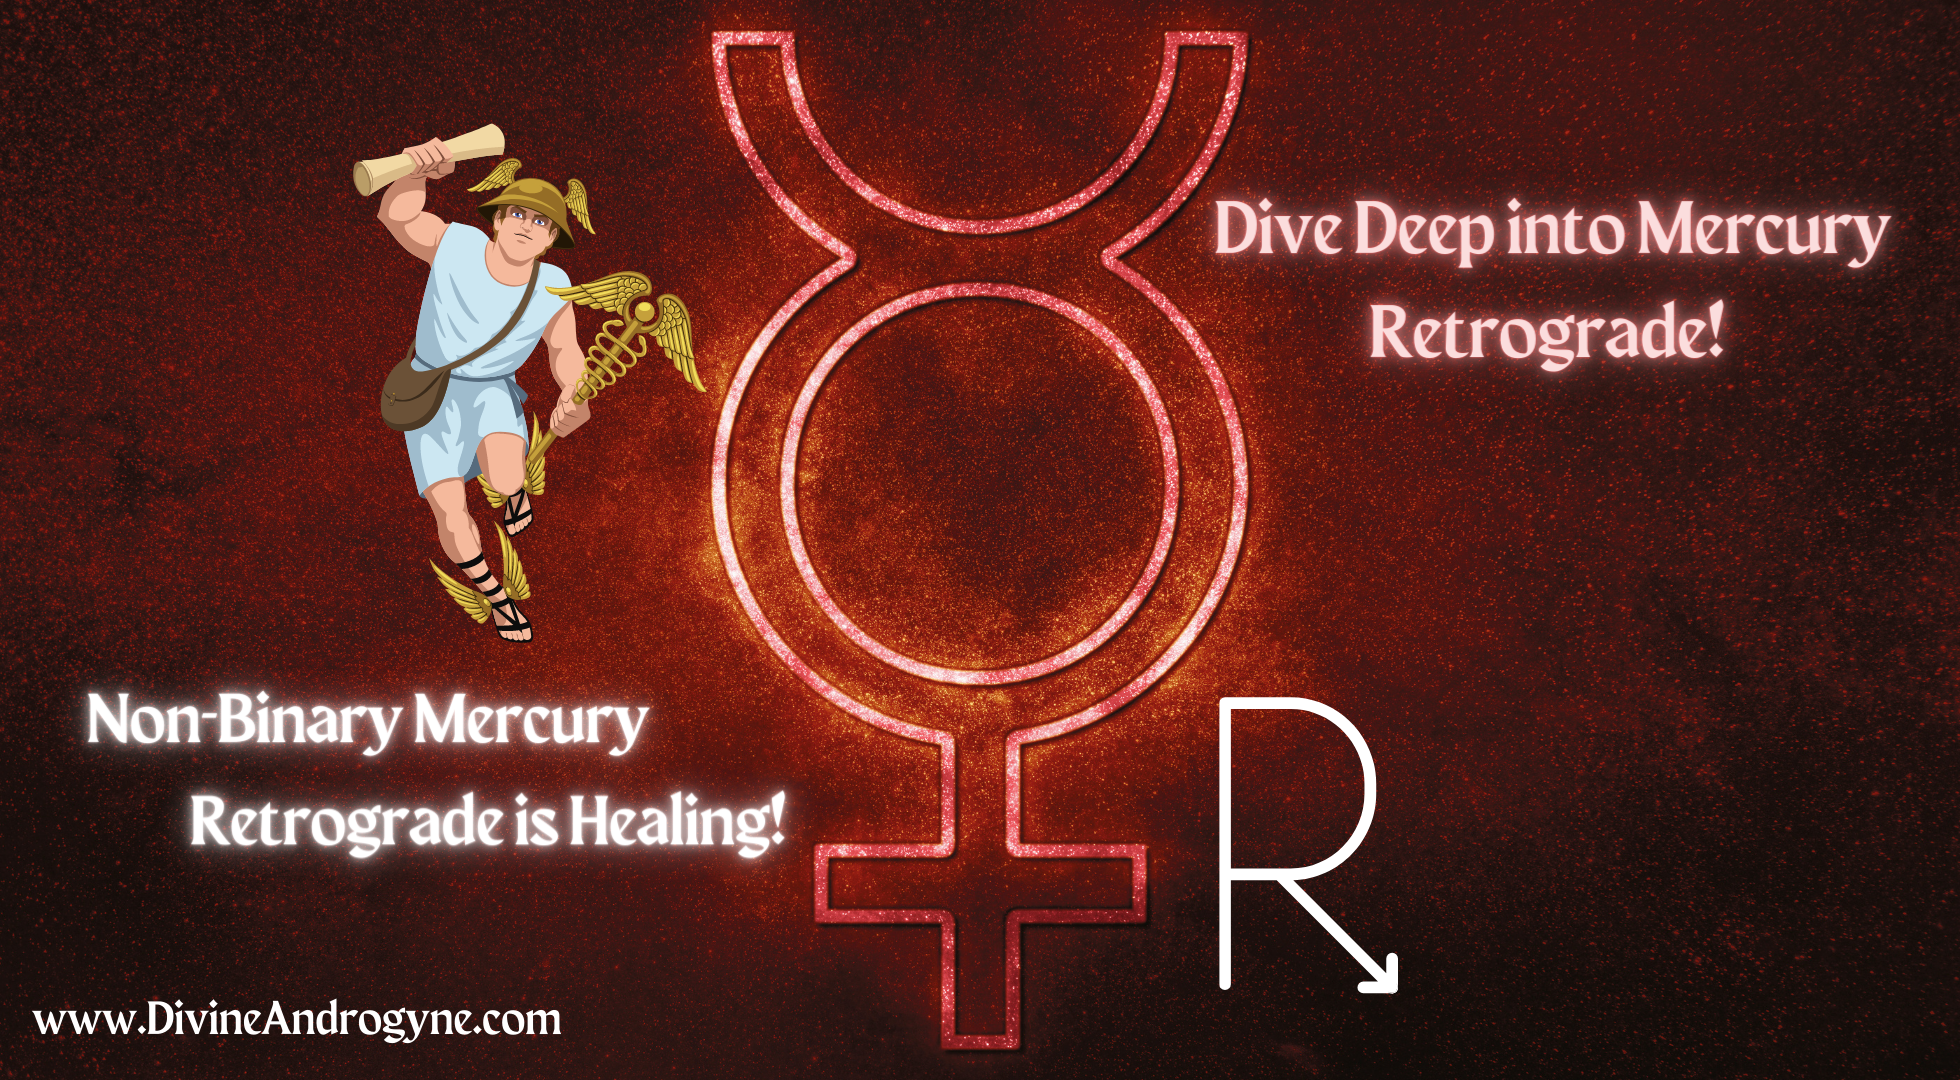 Mercury is Nonbinary & Retrograde is Healing!